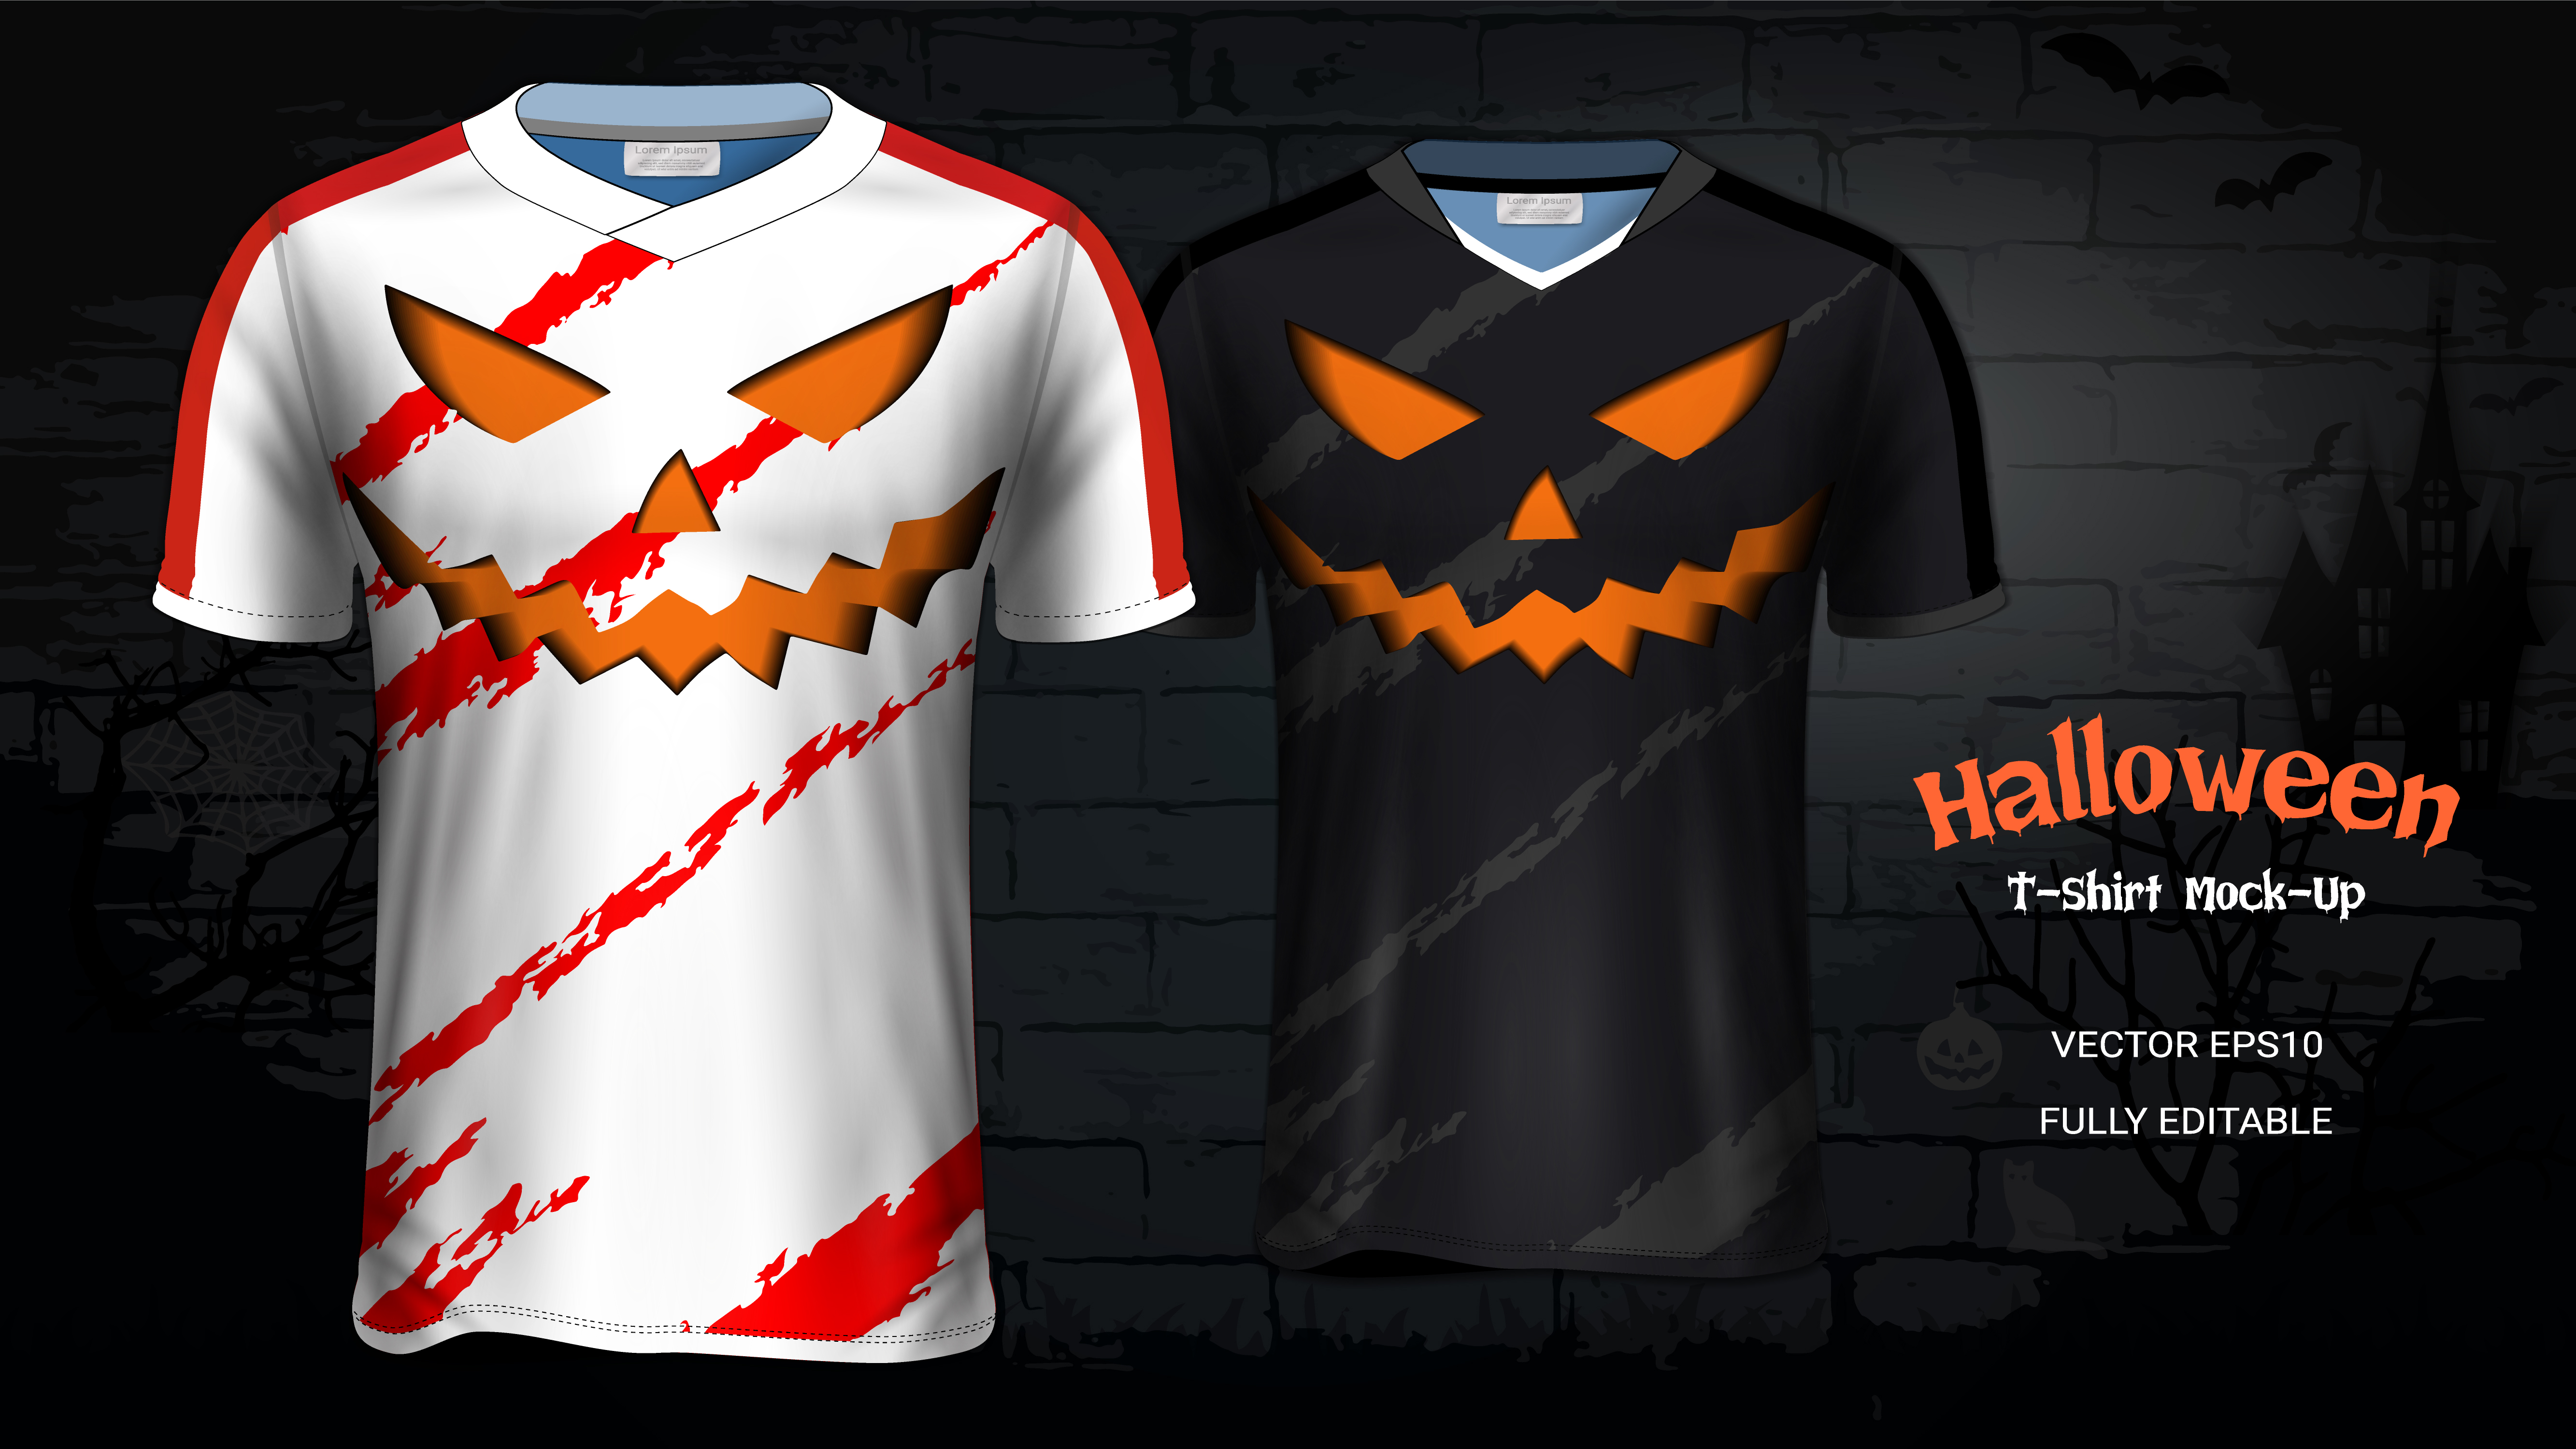 Download Halloween Costume T-Shirts Mockup Template. - Download Free Vectors, Clipart Graphics & Vector Art